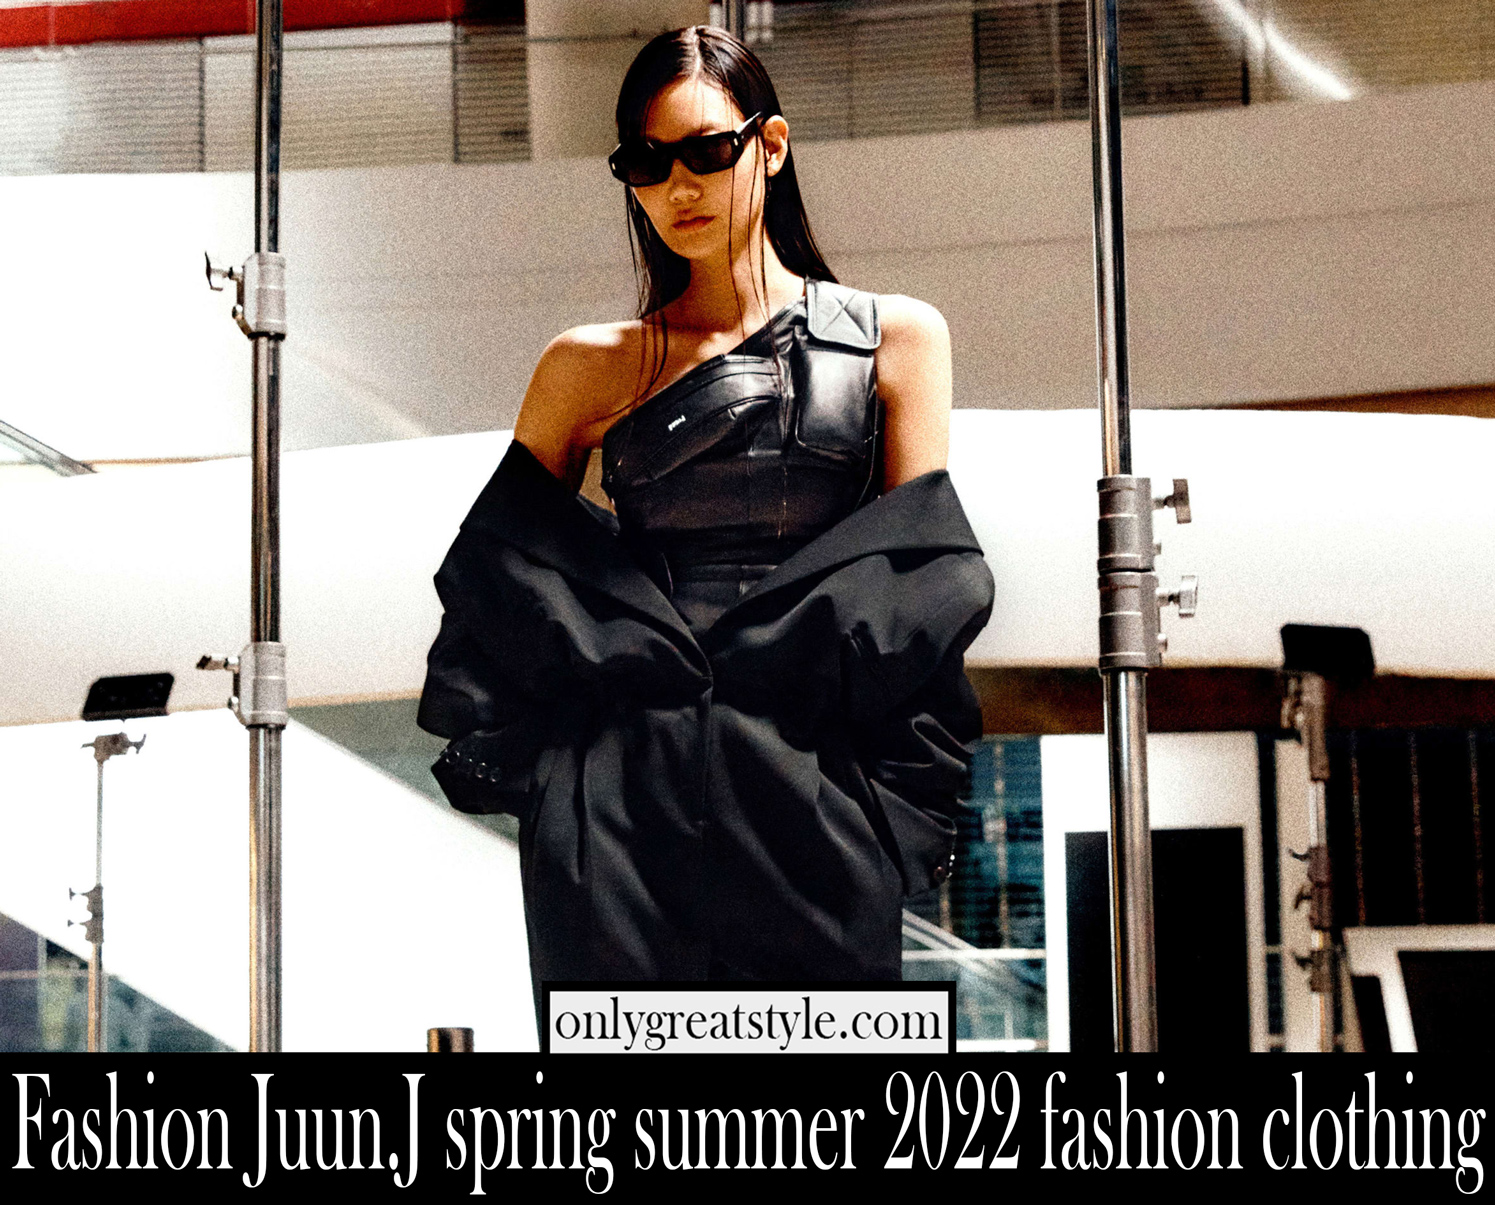 Fashion Juun.J spring summer 2022 fashion clothing